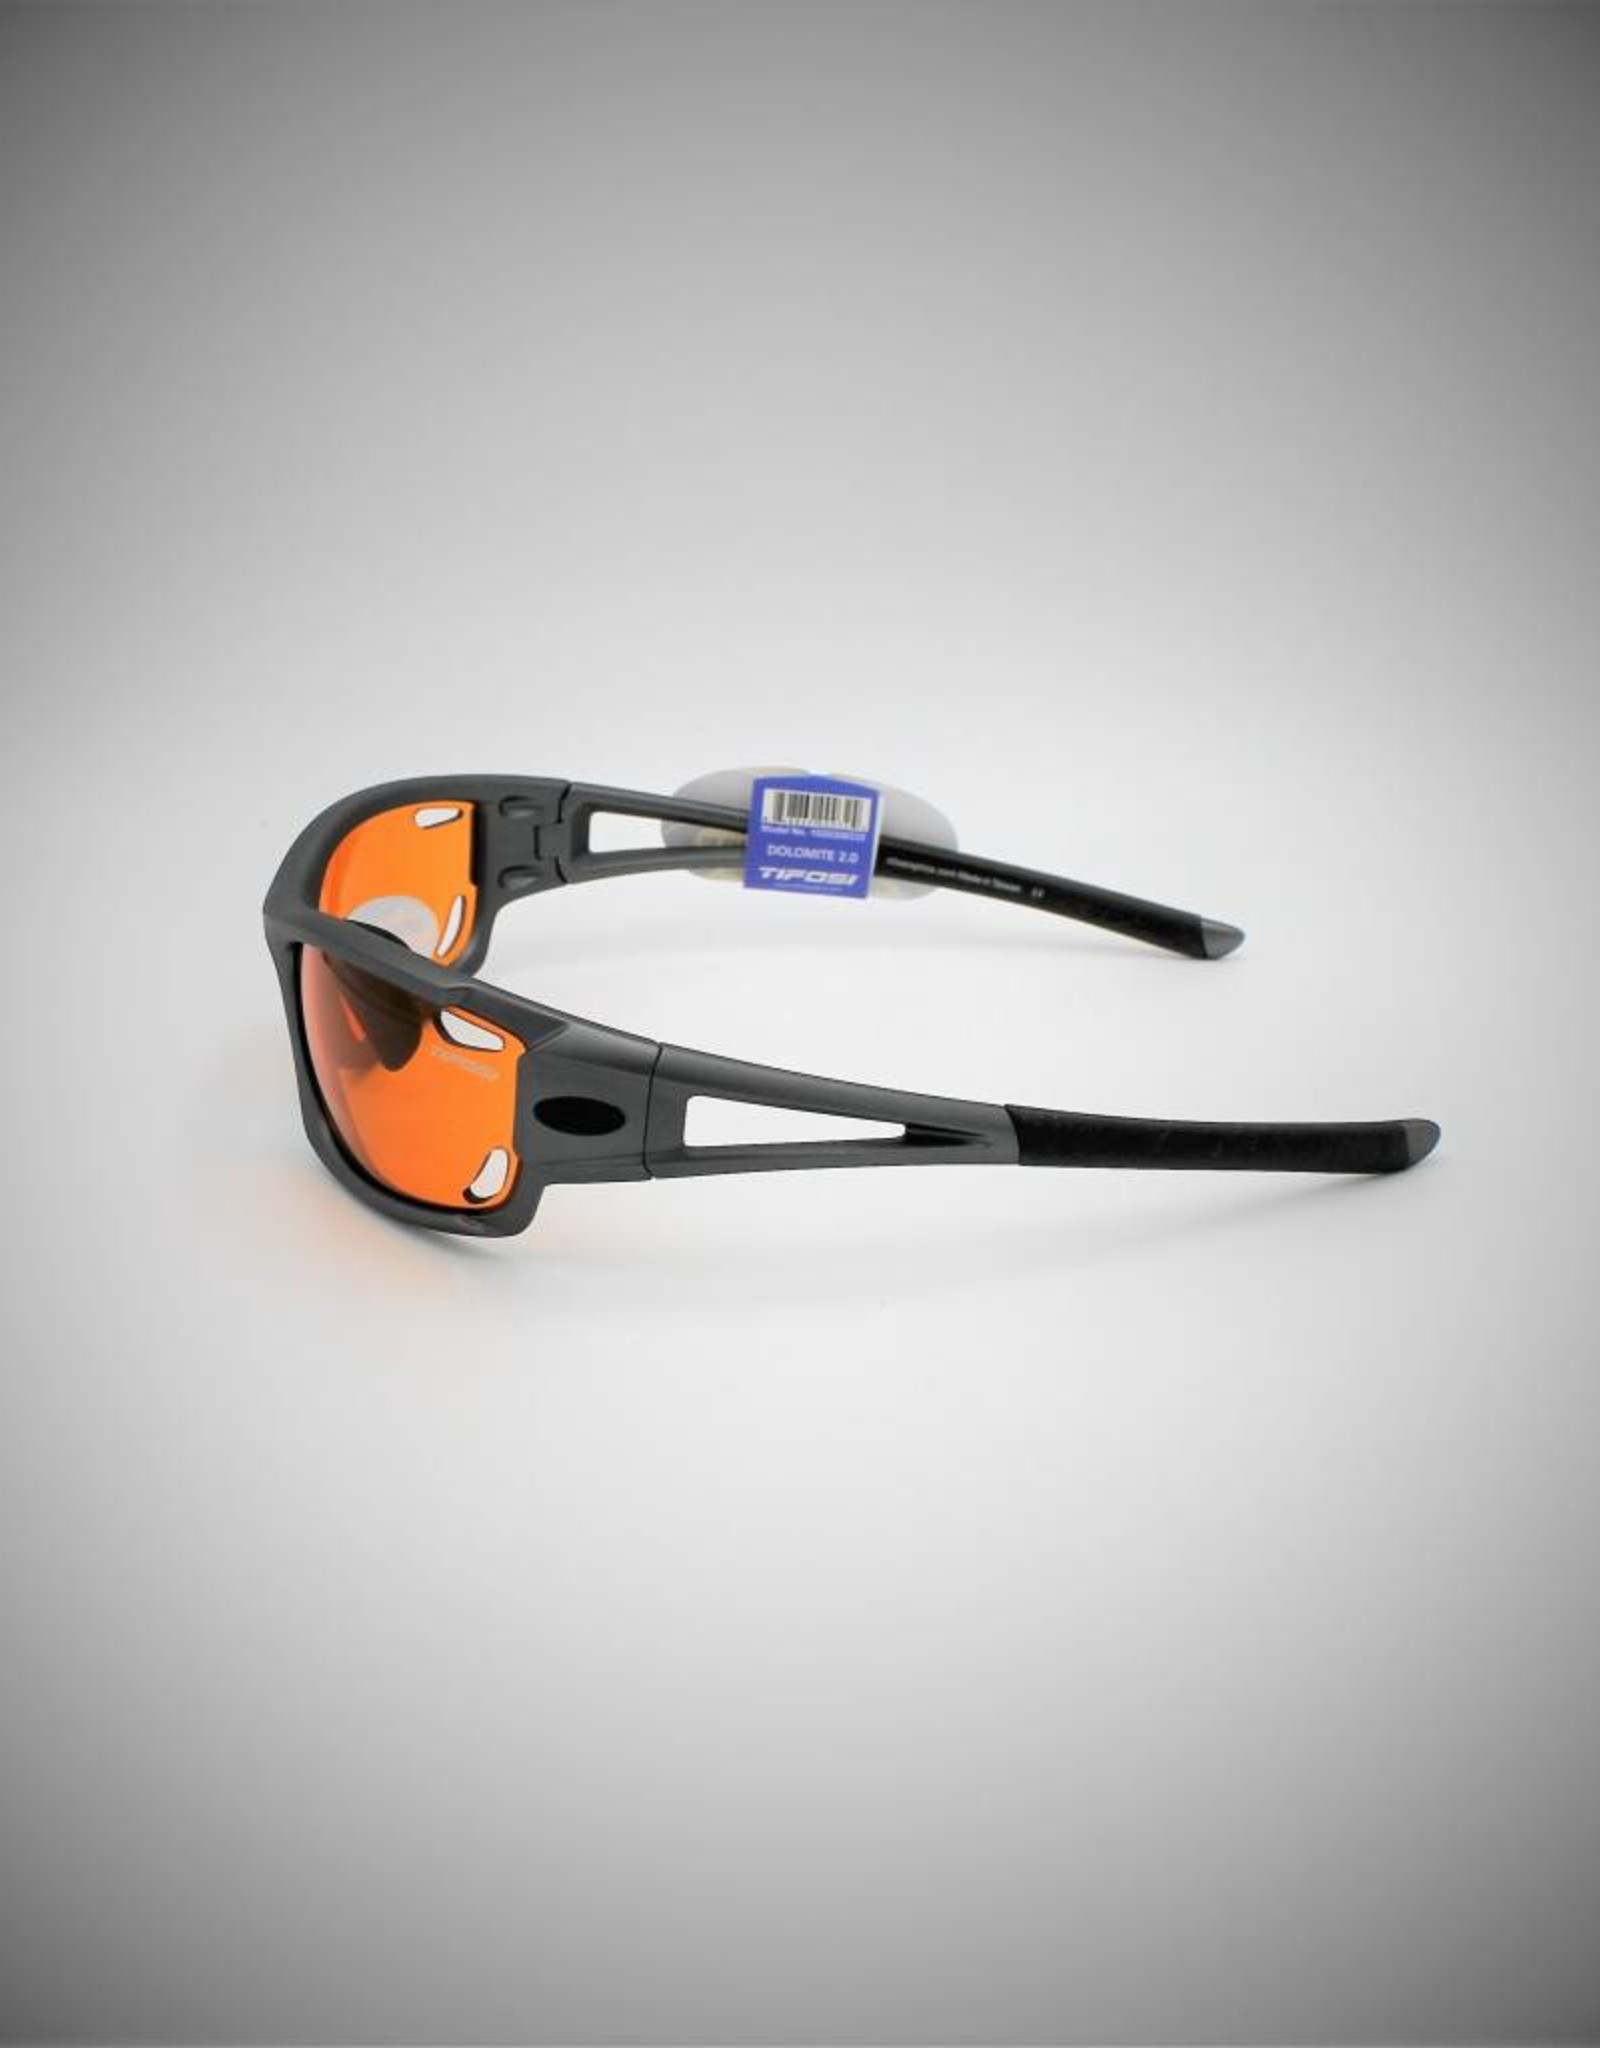 Tifosi Optics Dolomite 2.0, Matte Gunmetal Fototec Sunglasses BC Orange Fototec Lenses